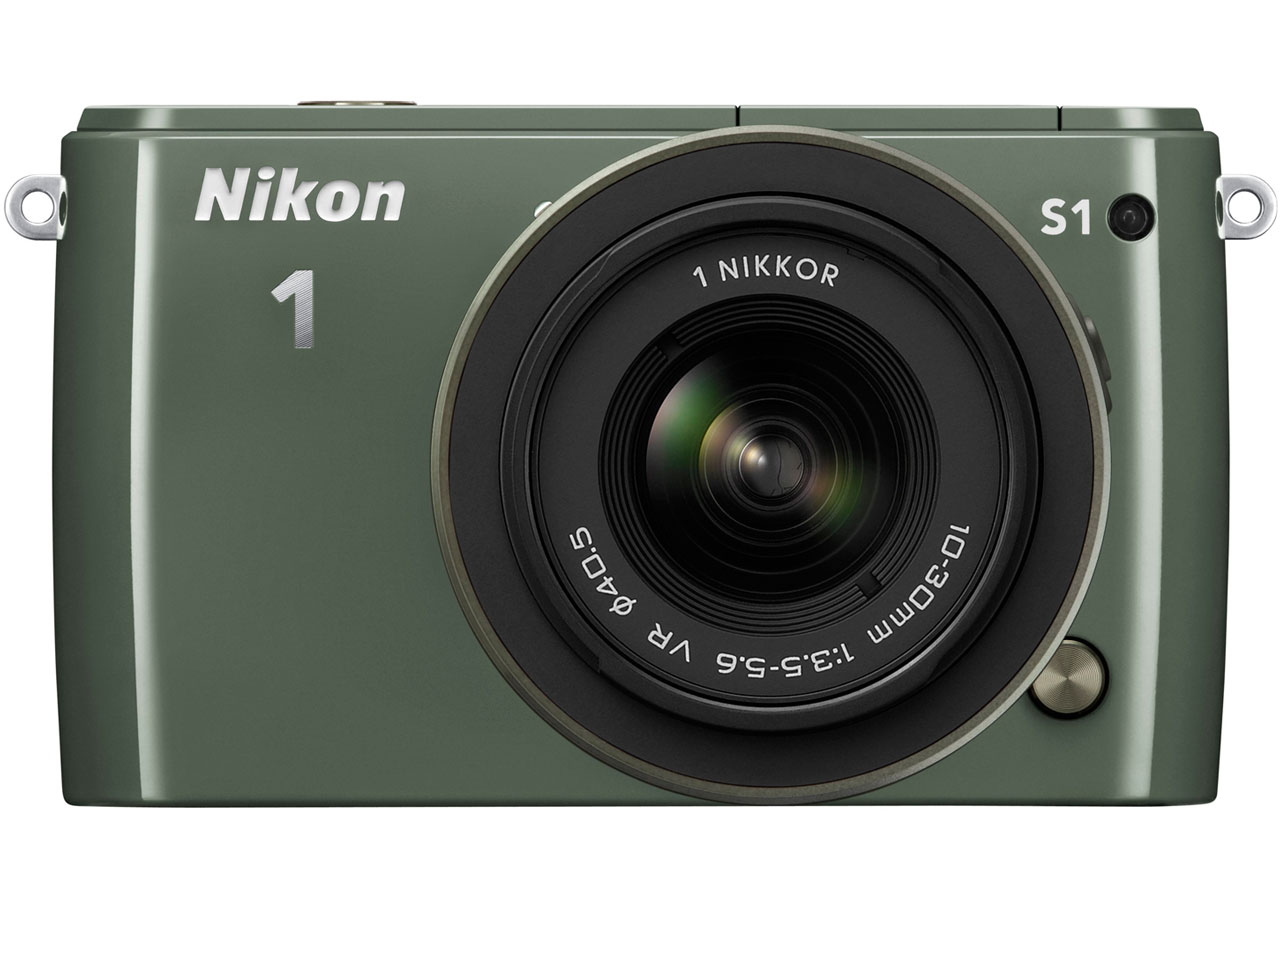 Nikon 1 S1 標準ズームレンズキット [カーキ]